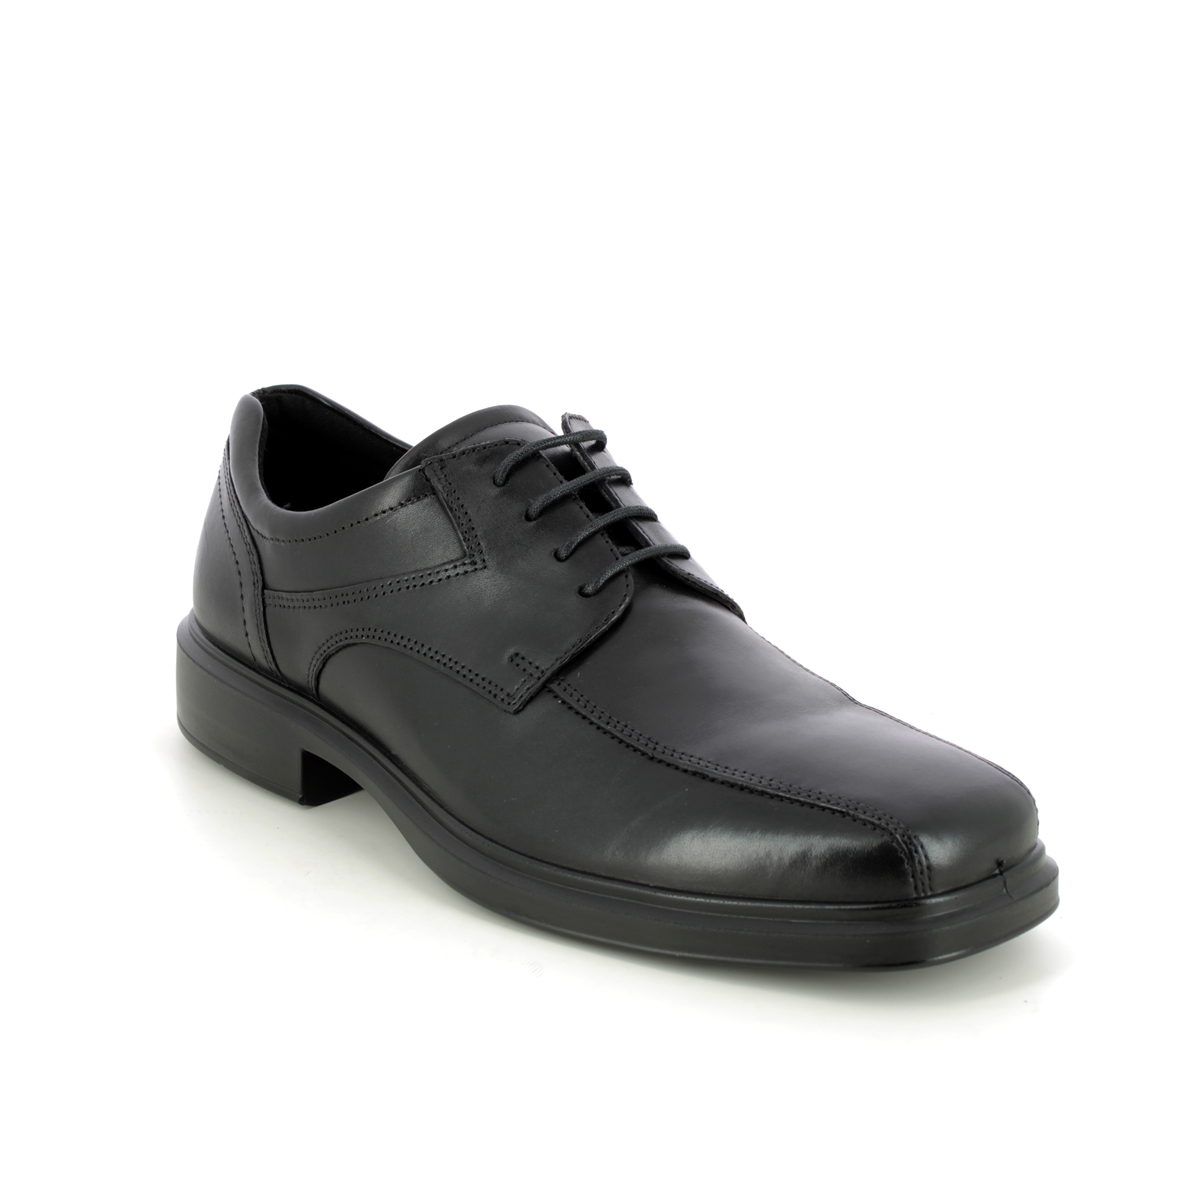 Ecco Helsinki 2 Tram Black Leather Mens Formal Shoes 500174-01001 In Size 45 In Plain Black Leather